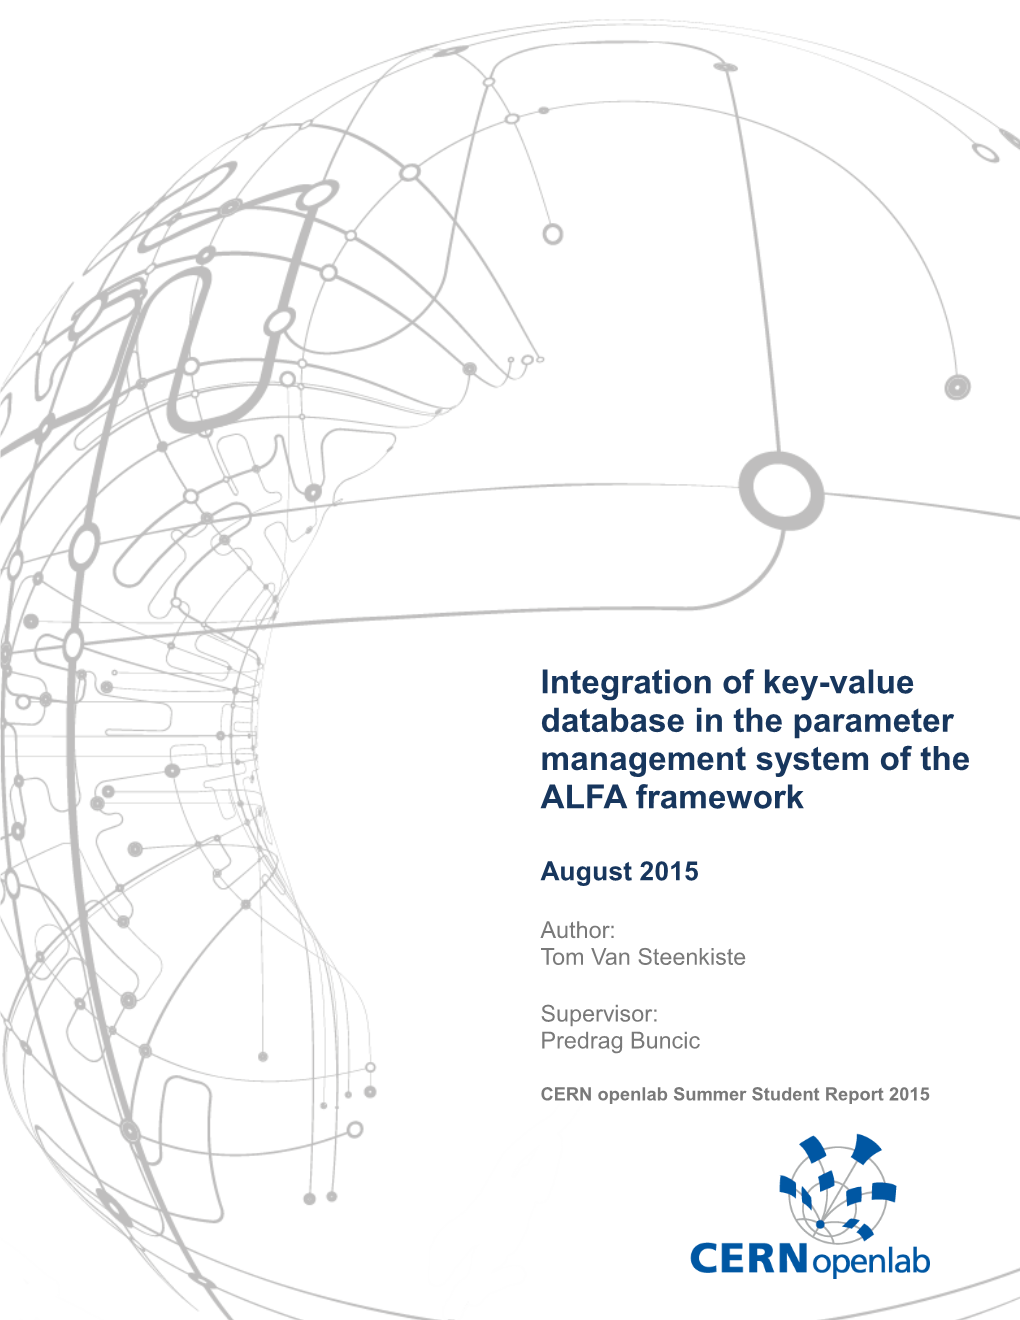 Integration of Key-Value Database in the Parameter Management System of the ALFA Framework